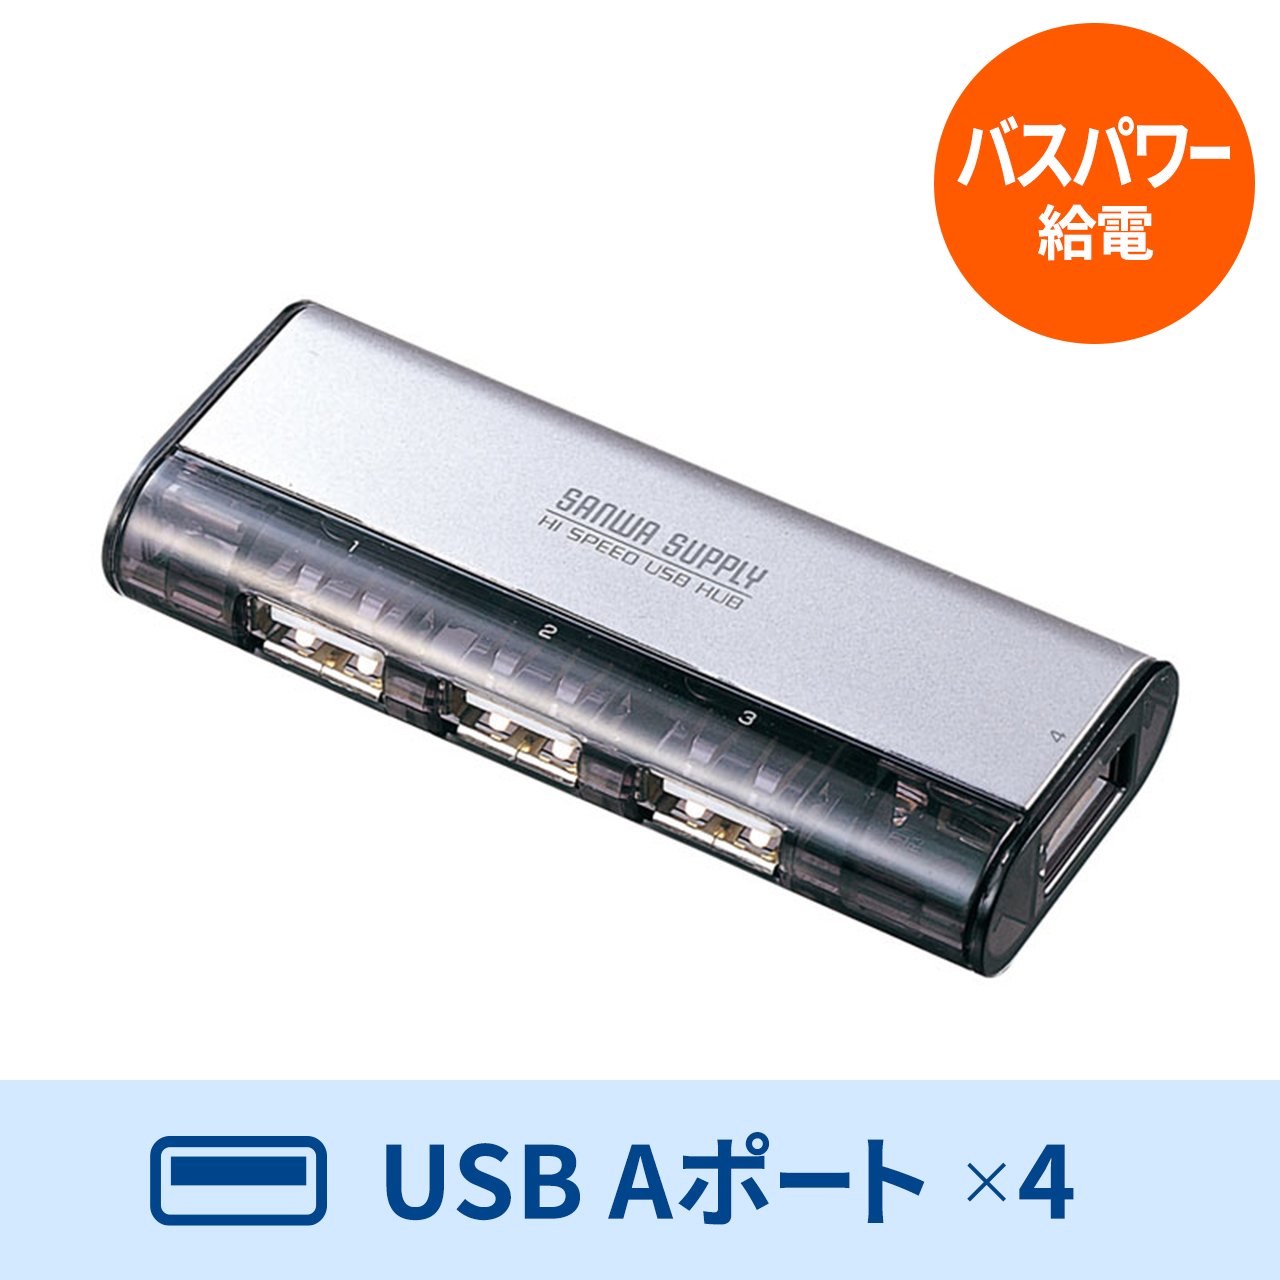 USBnu USB A 4|[g USB2.0 ACA_v^sv oXp[ ̓}Olbgt 1m Vo[ USB-HUB226GSVN